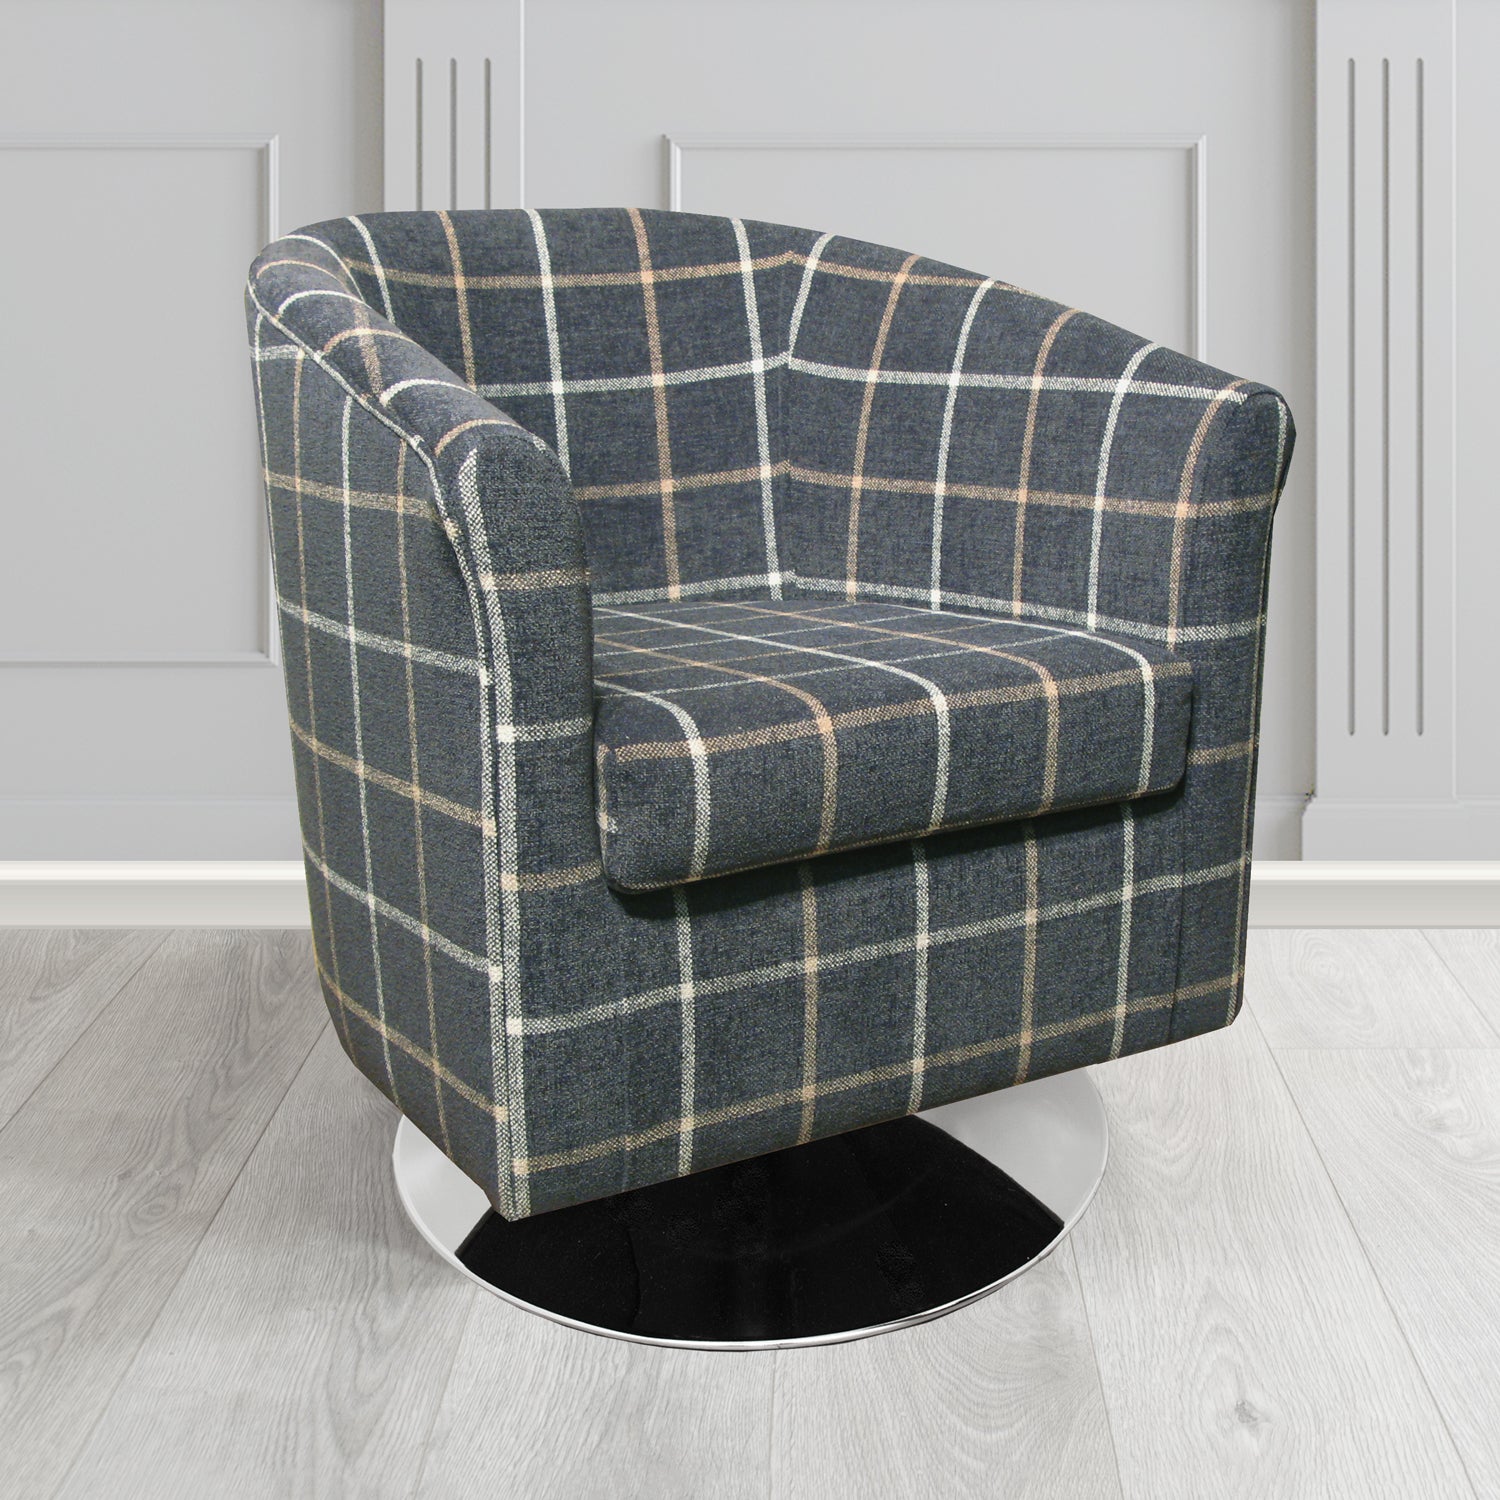 Tuscany Swivel Tub Chair in Lana Granite Check Tartan LAN1265 Crib 5 Fabric - The Tub Chair Shop